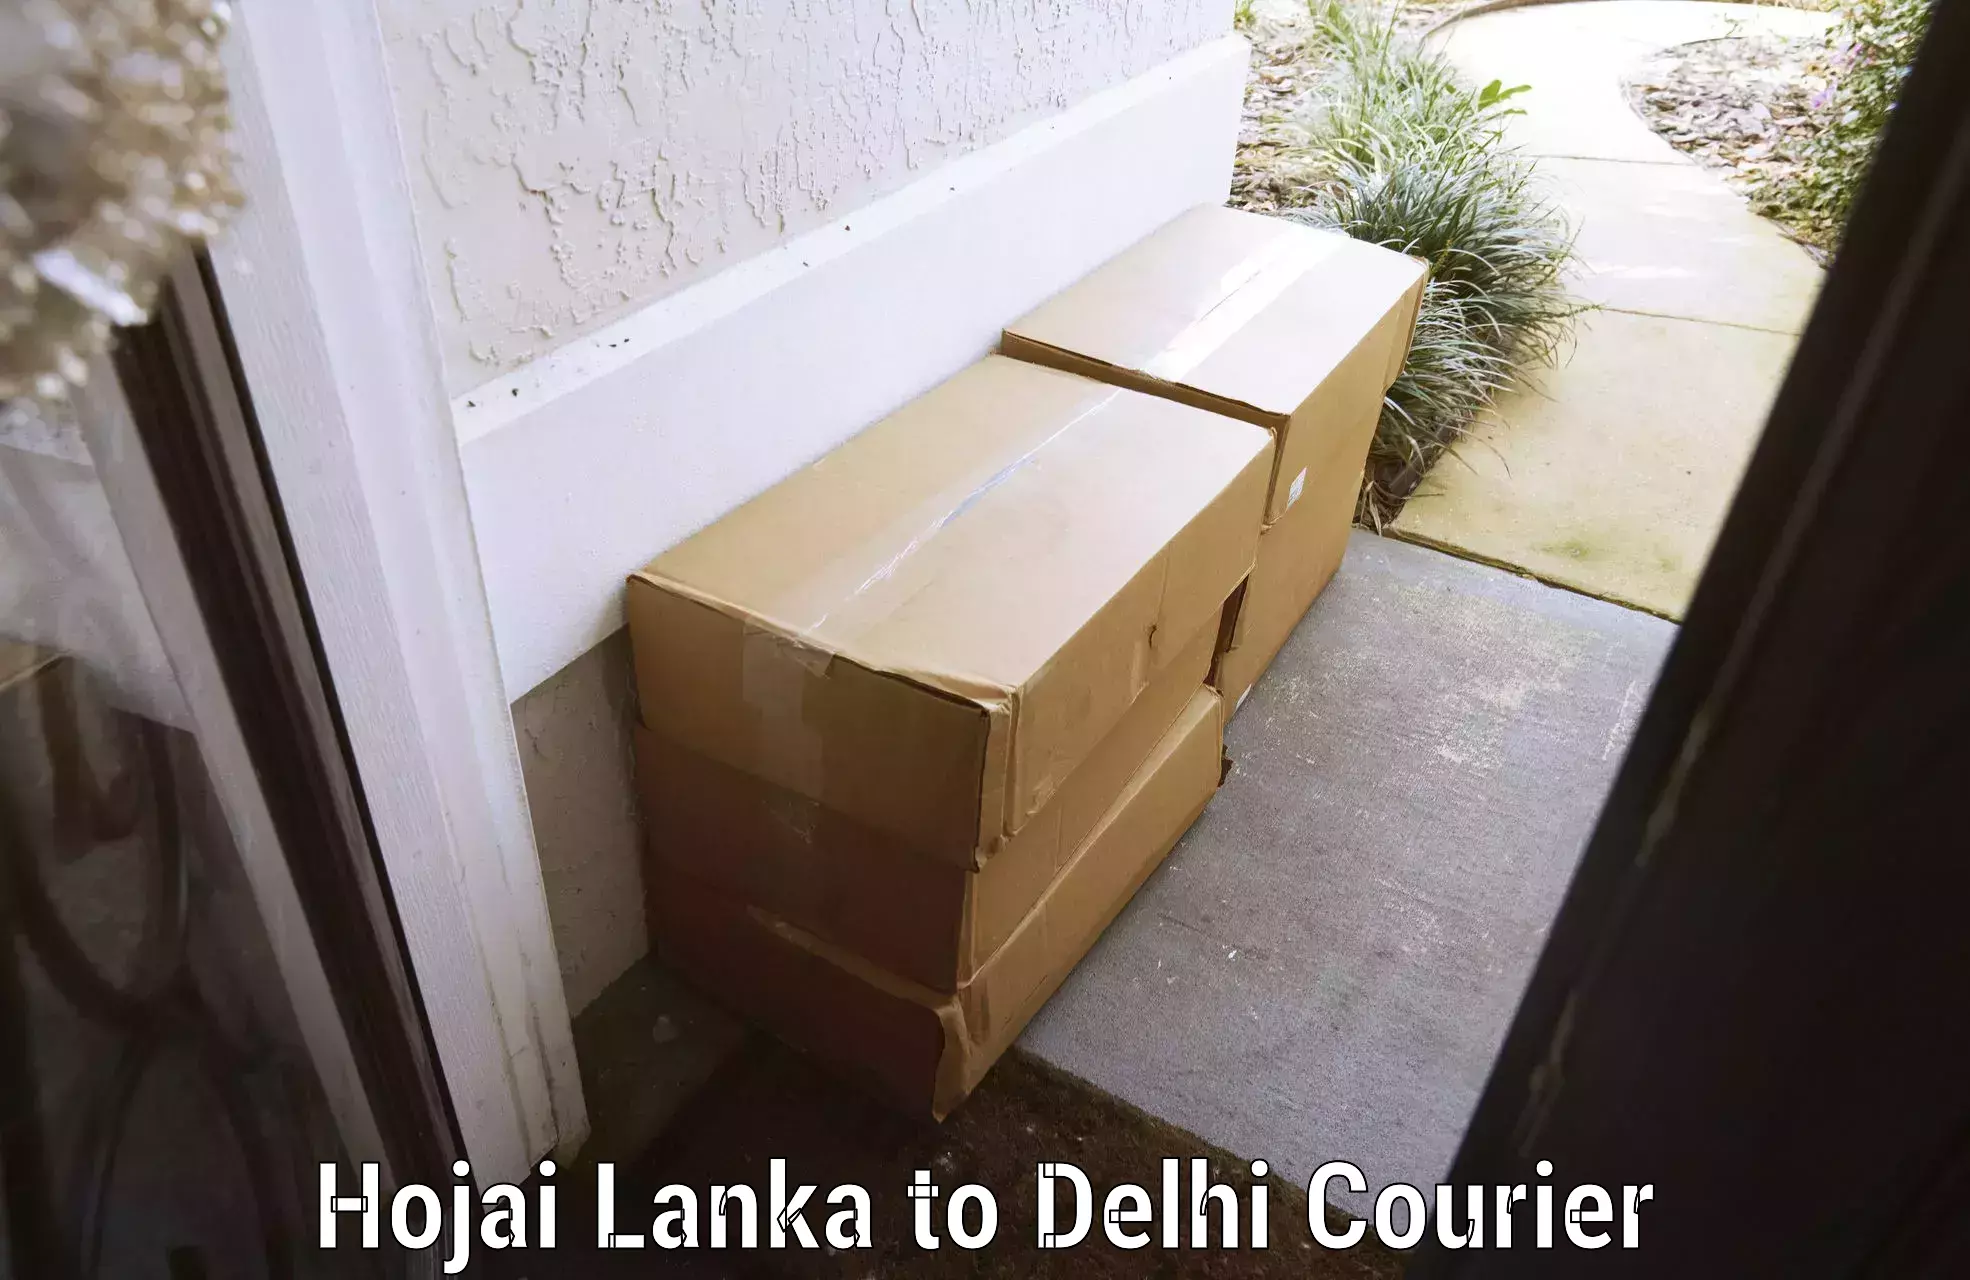 Same day baggage transport Hojai Lanka to East Delhi